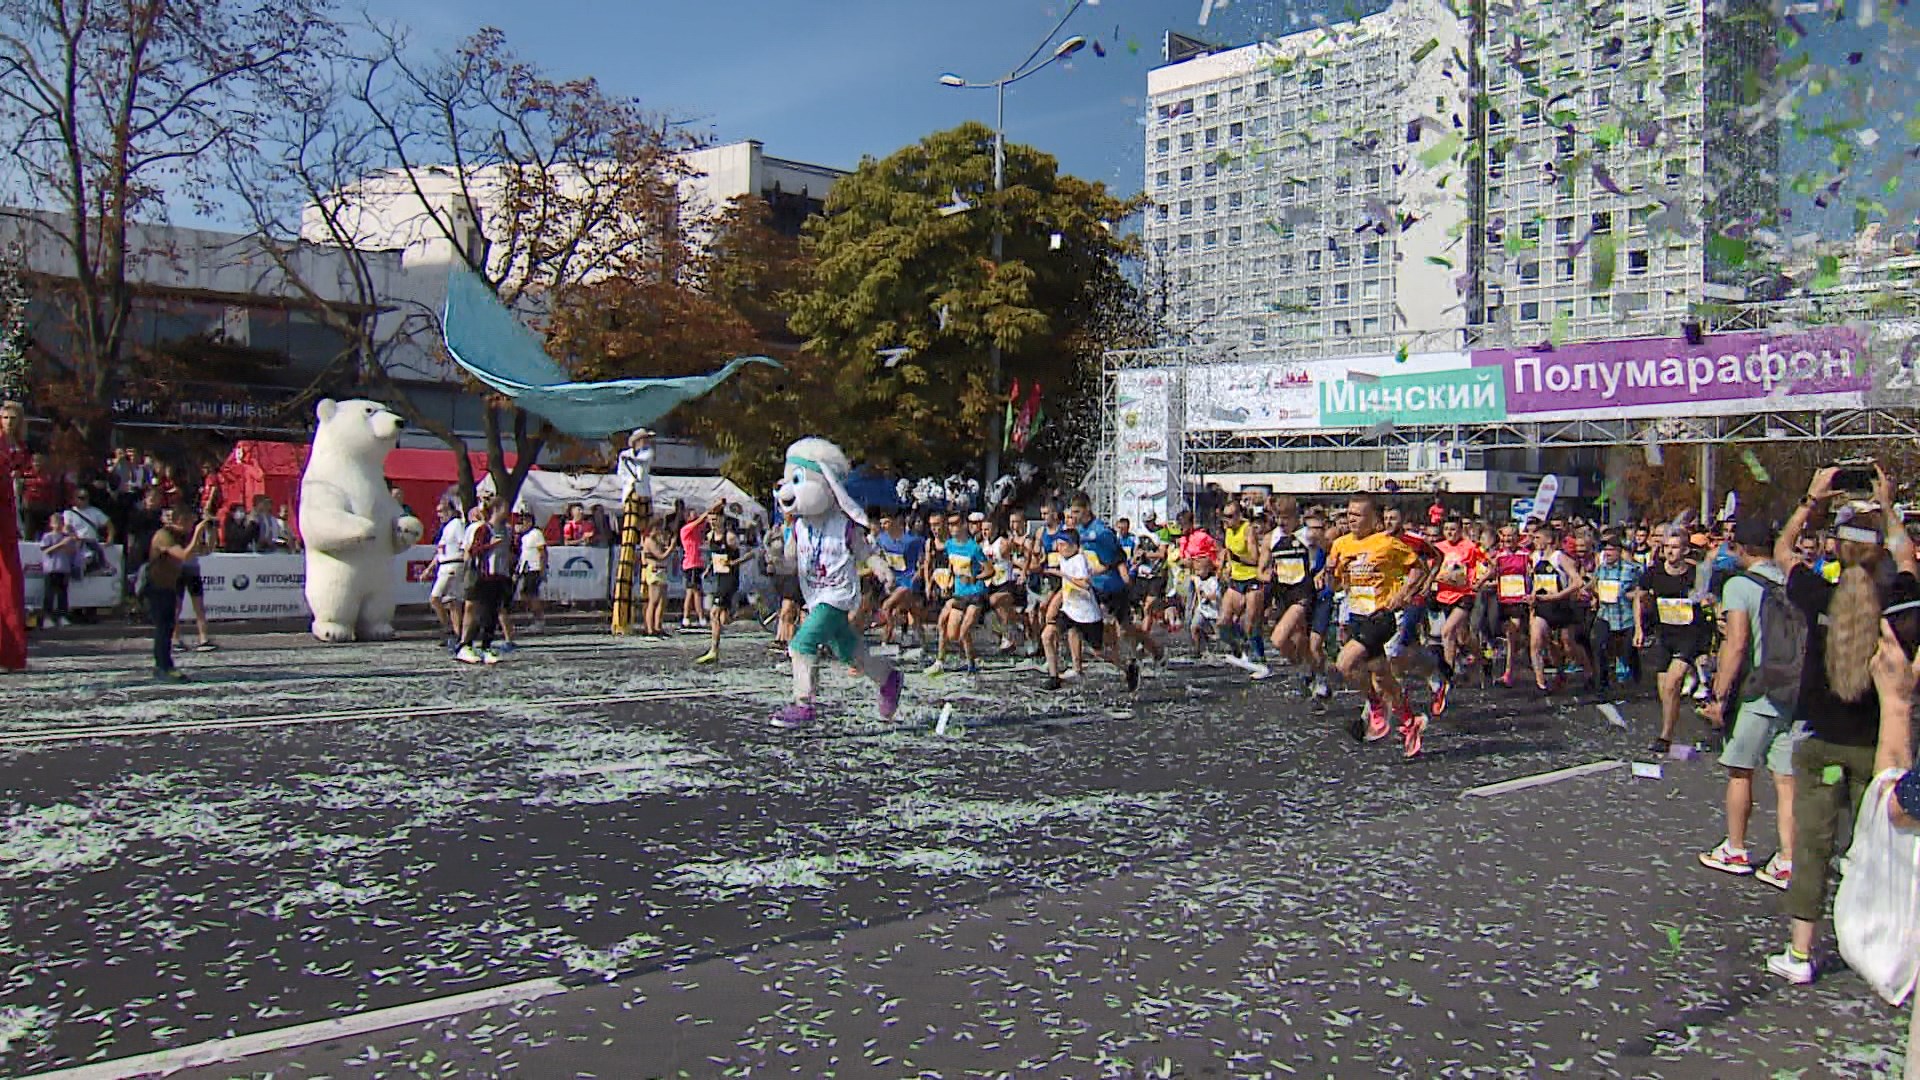 Half marathon 2021 was held in Minsk